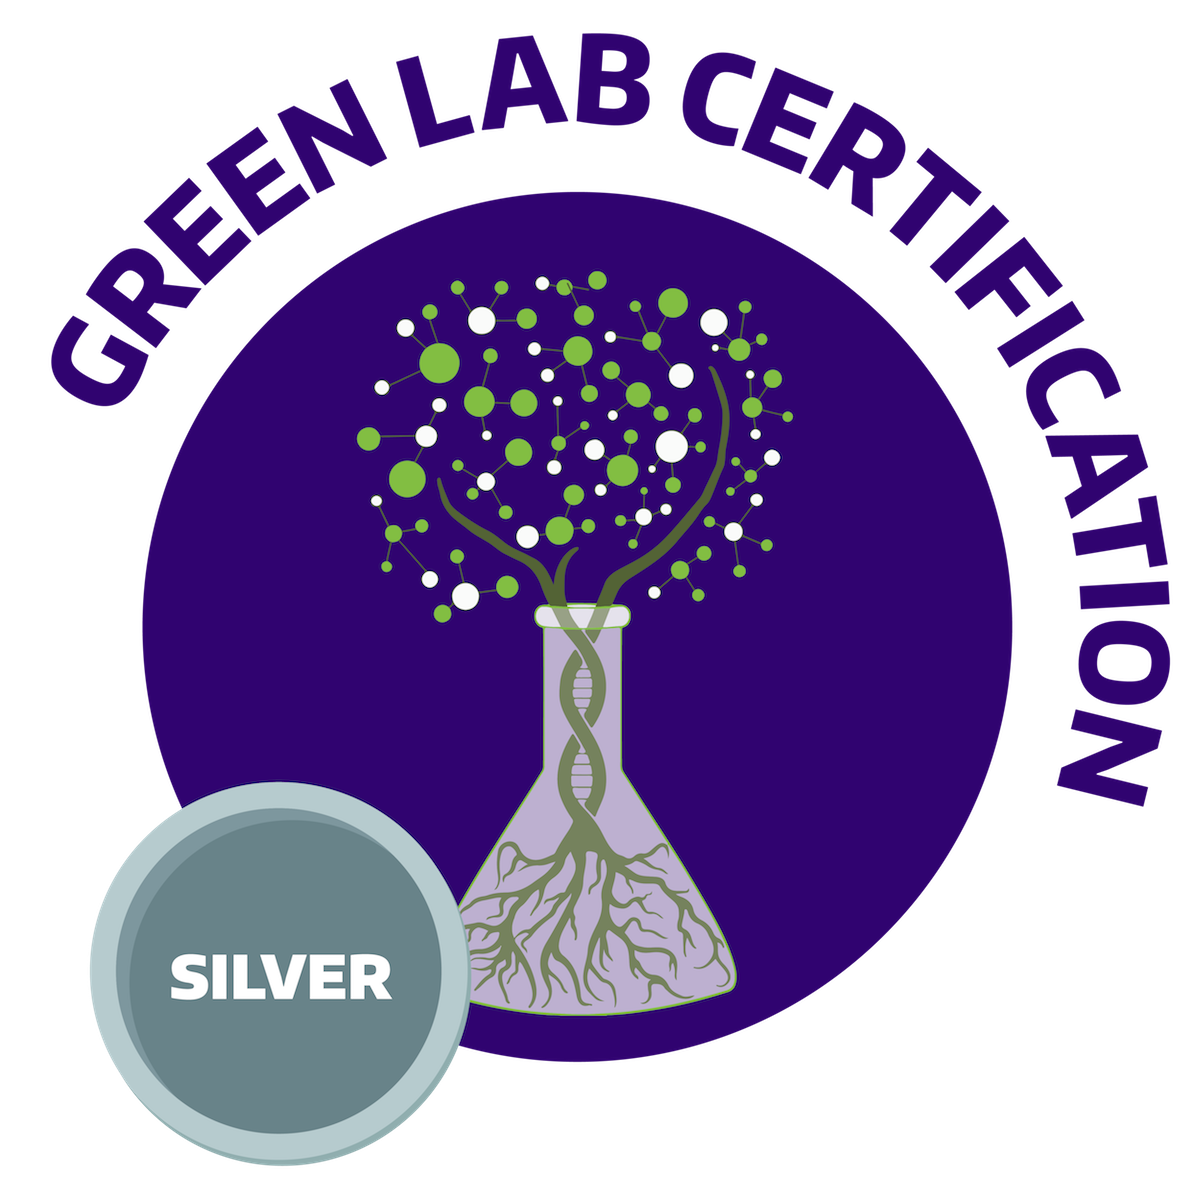 Green Lab silver level